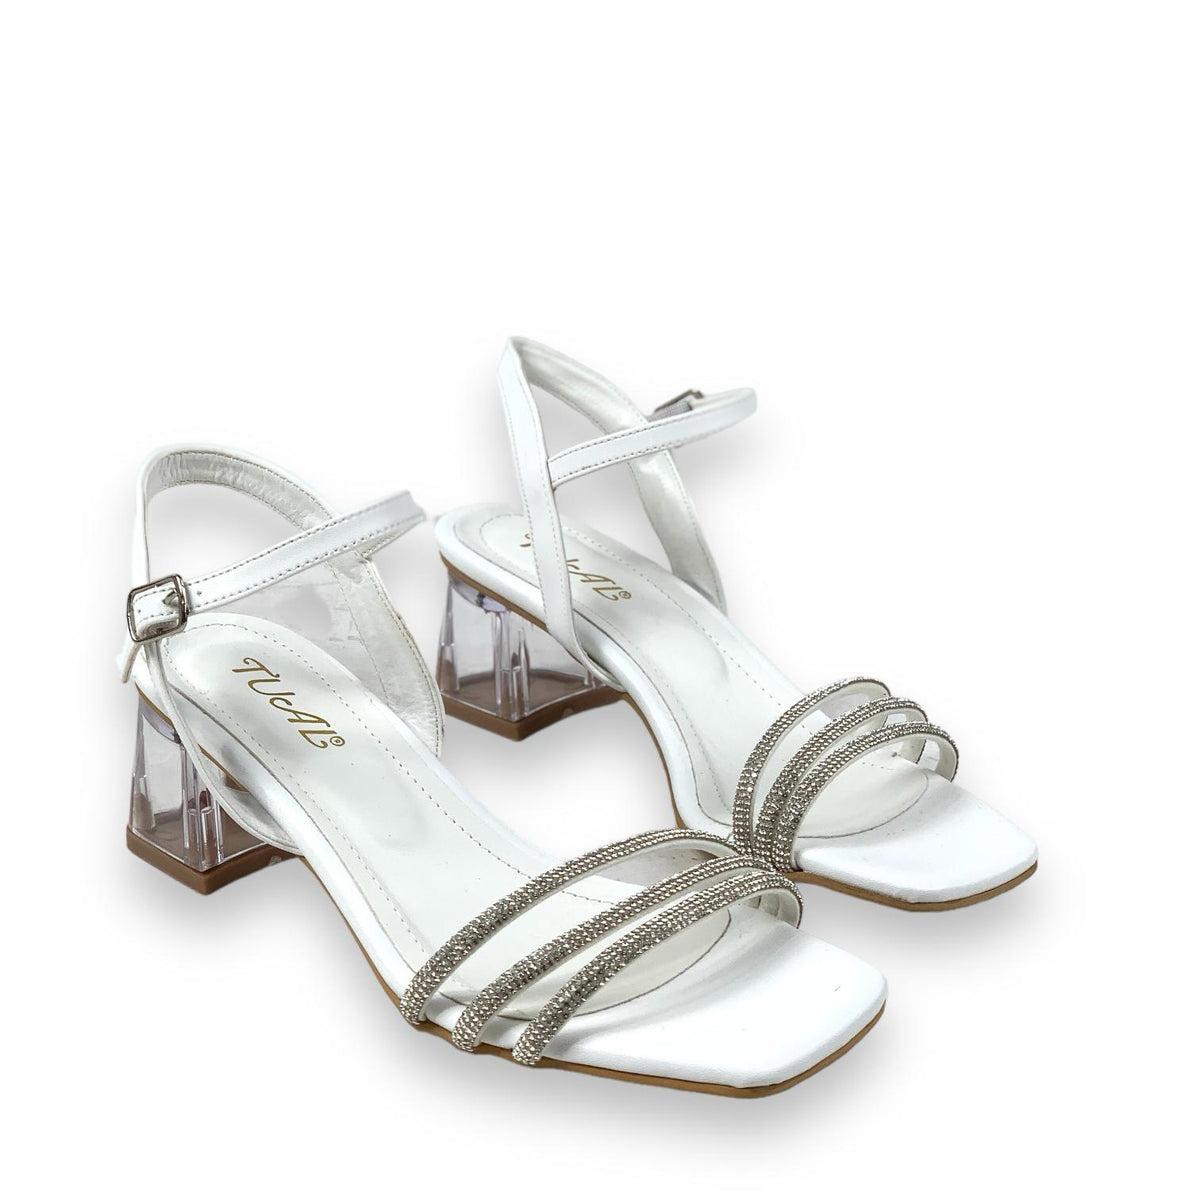 Women's Tels White Low Transparent Heel 3-Piece Stone Sandals 5 Cm - STREETMODE™